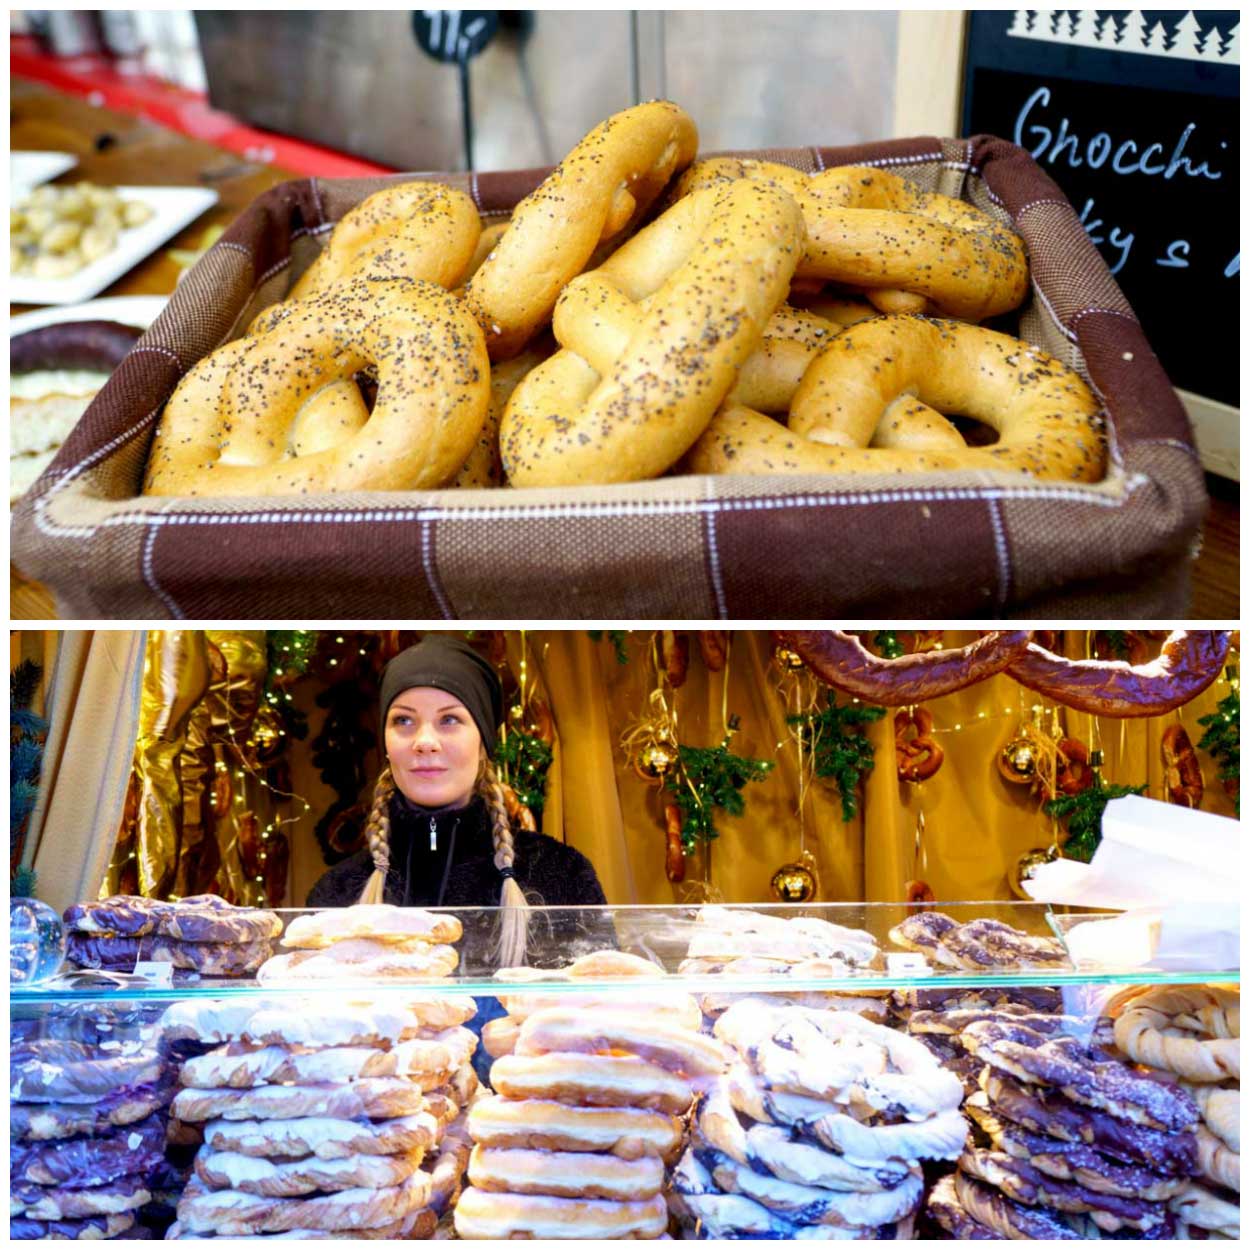 A collage of European pretzels at a Christmas Market